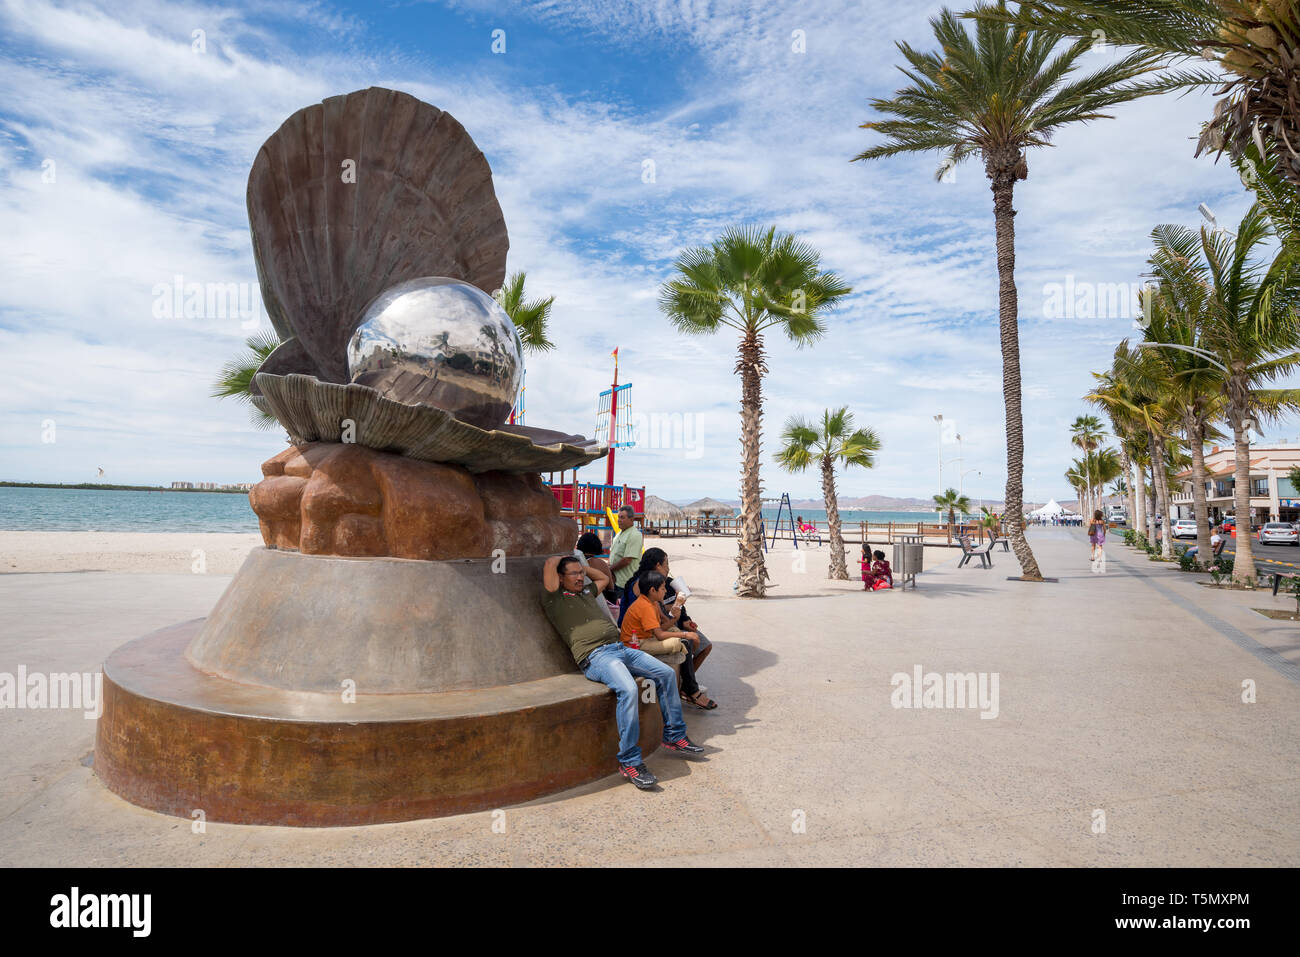 Oyster pearl sculpture on the malecon in La Paz, Baja California Sur, Mexico. Stock Photo